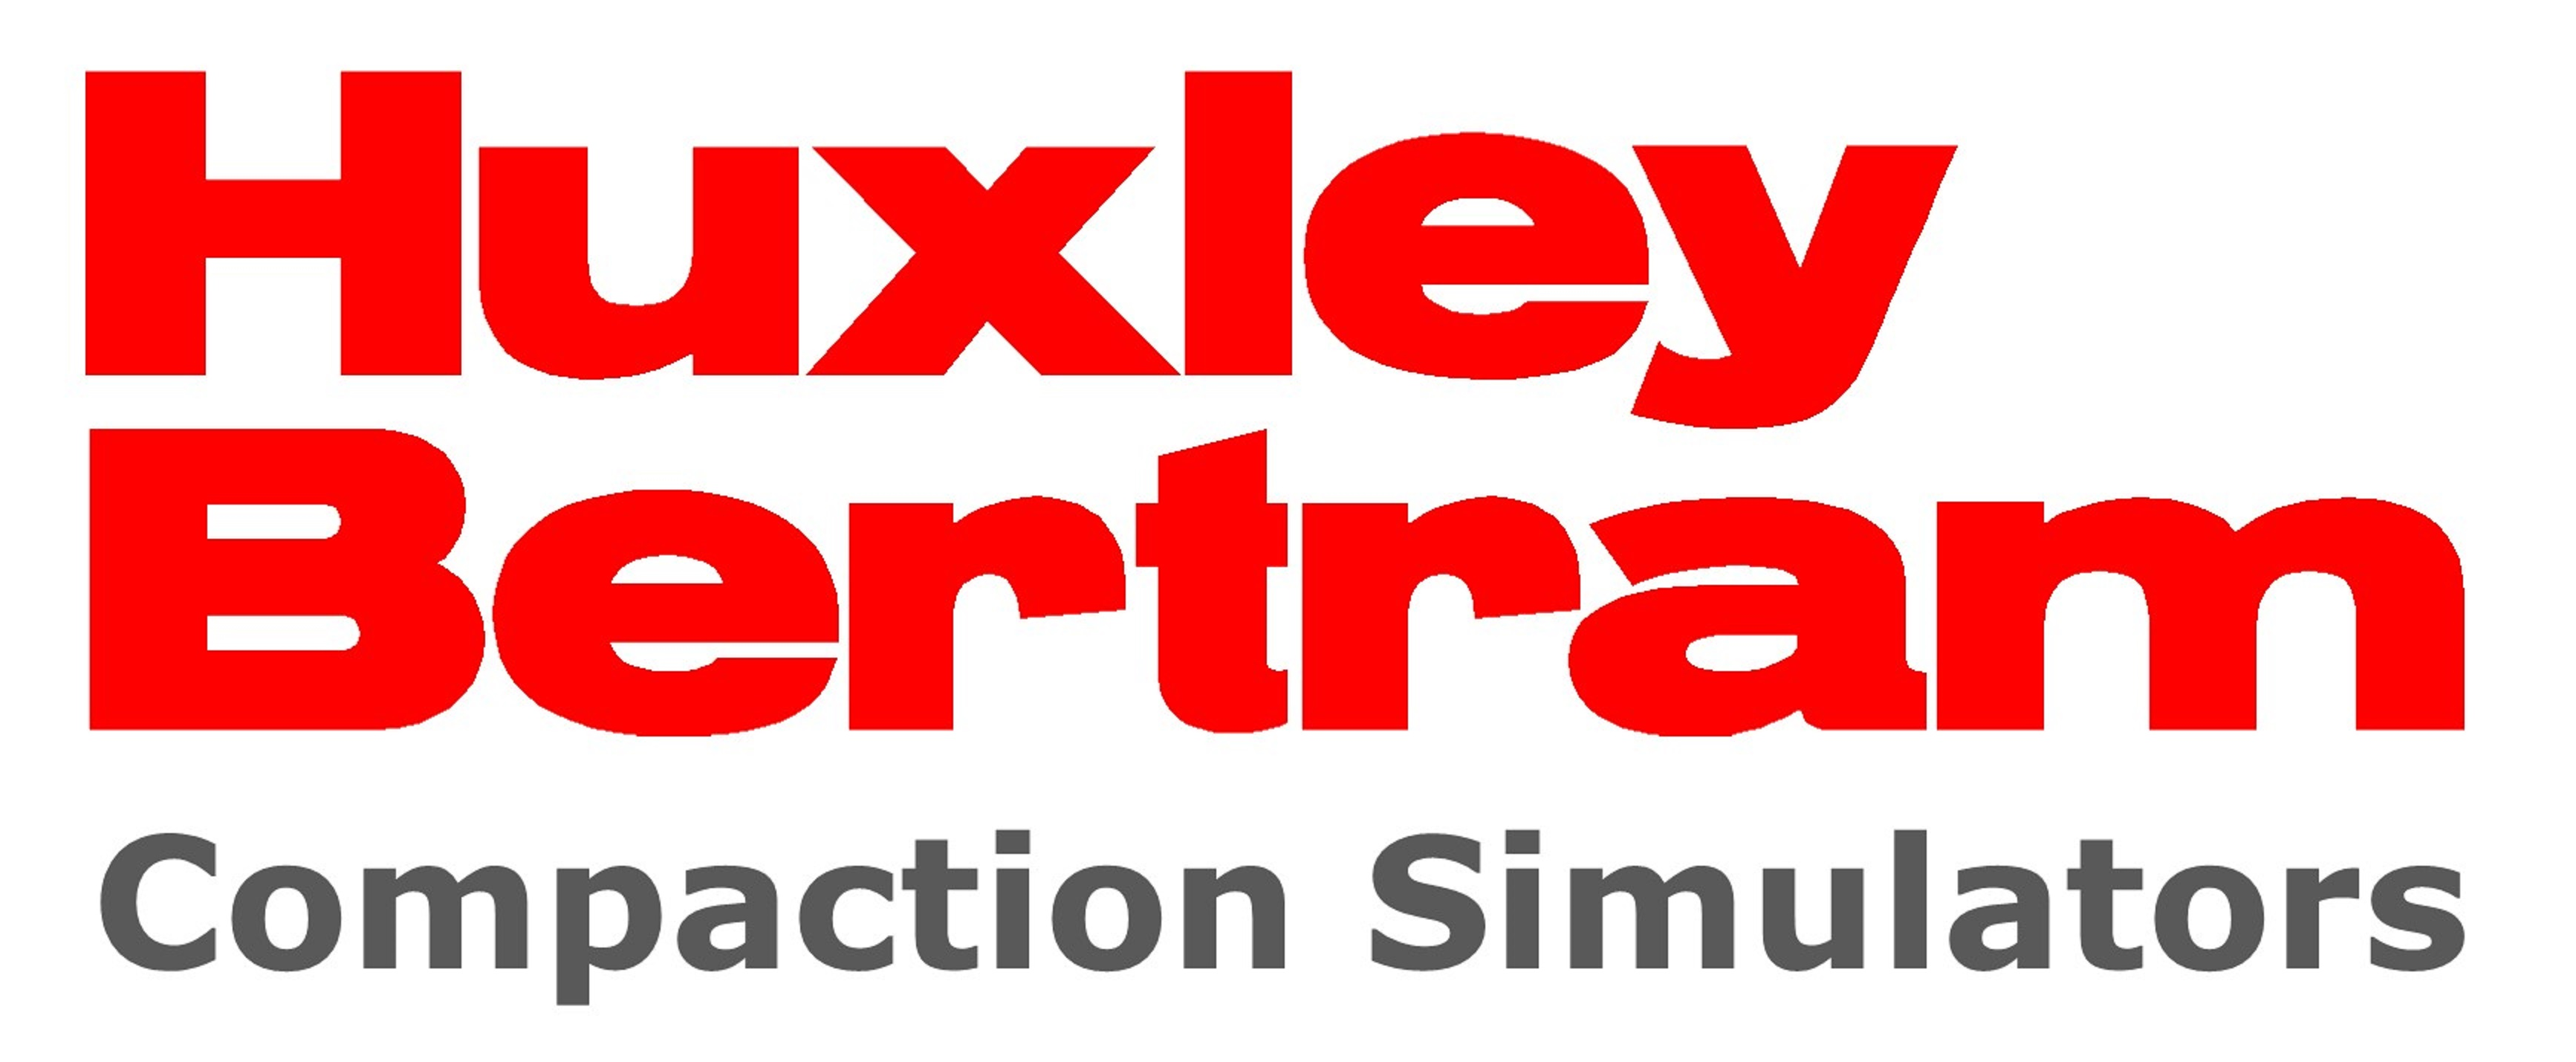 Huxley Bertram Commission Multiple Compaction Simulators In North America